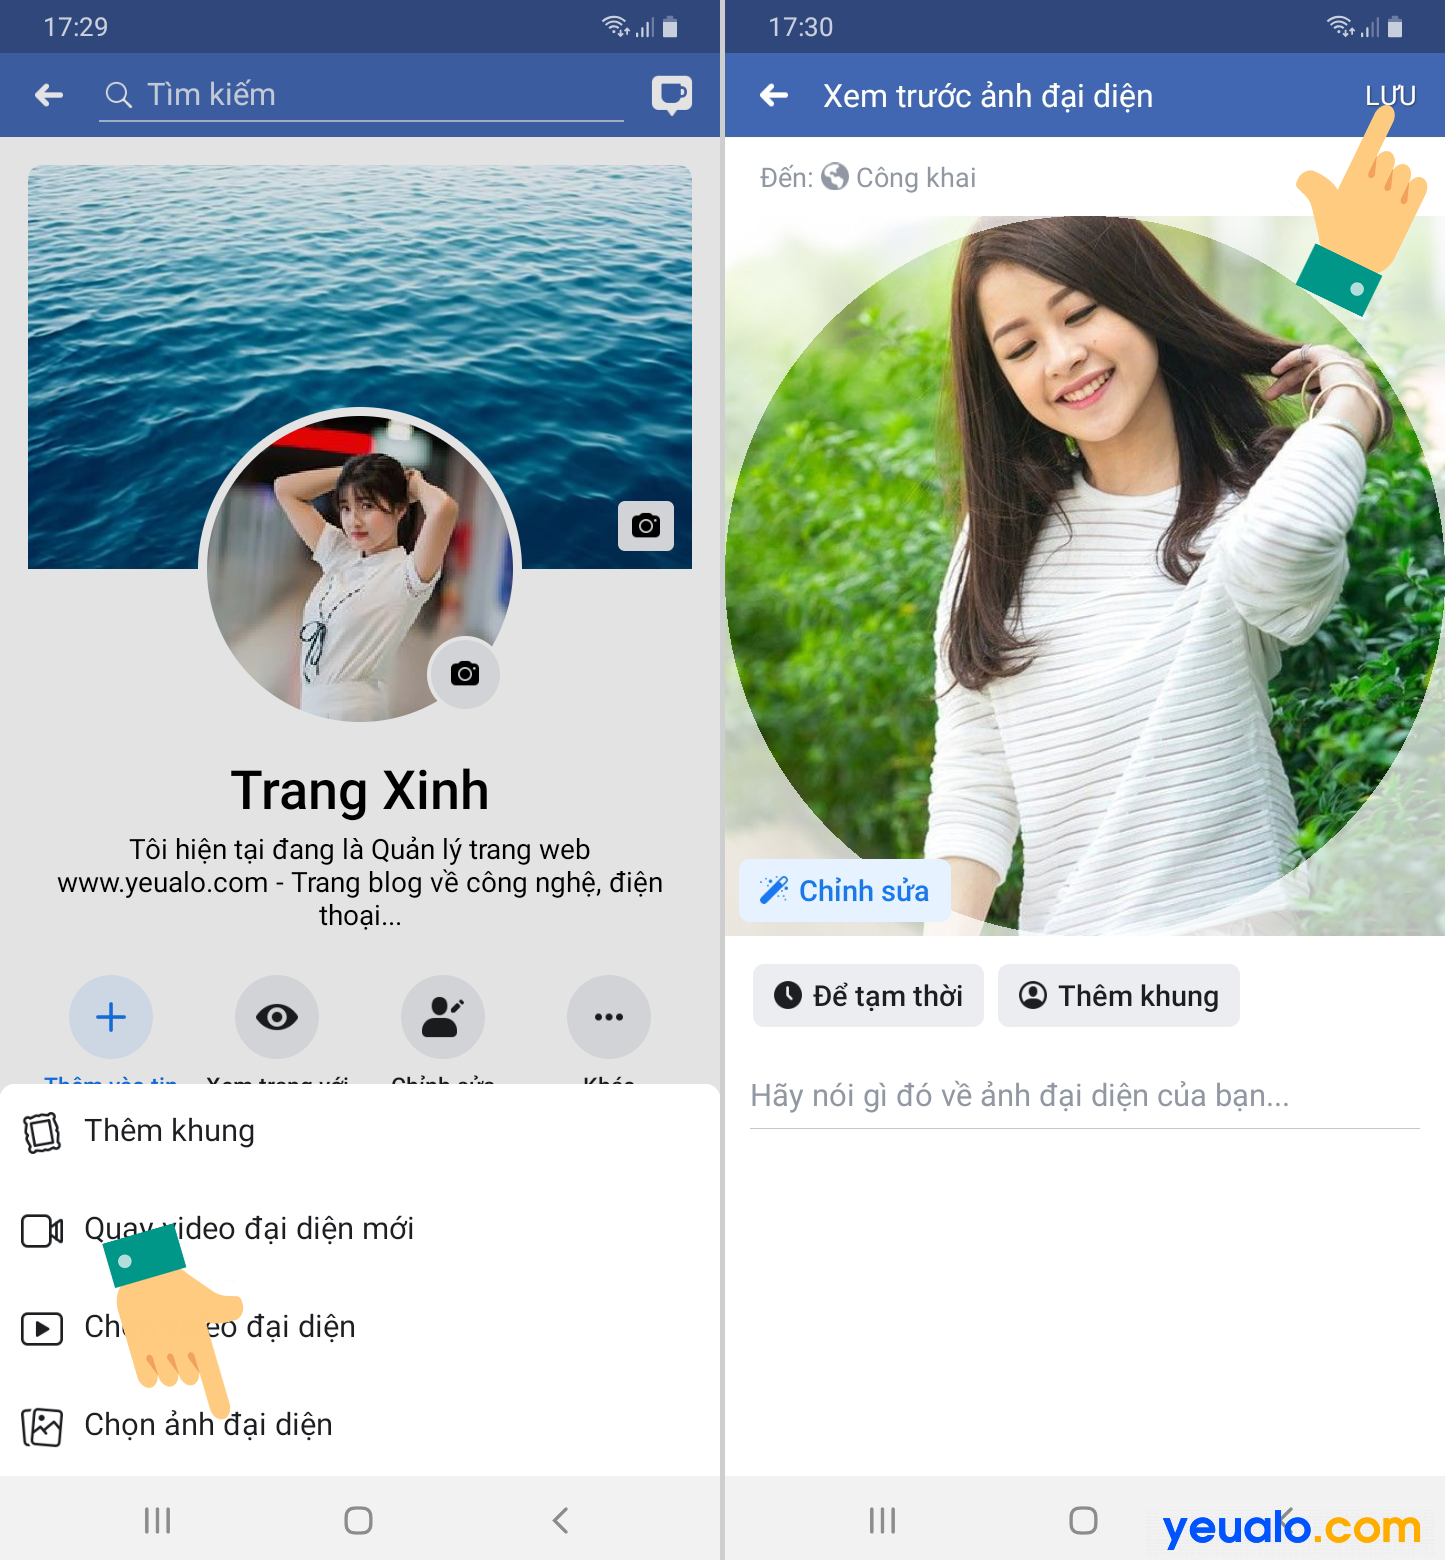 2 Cách Để Avatar Mặc Định Facebook Nam Top 95 Về Avatar Cho Facebook